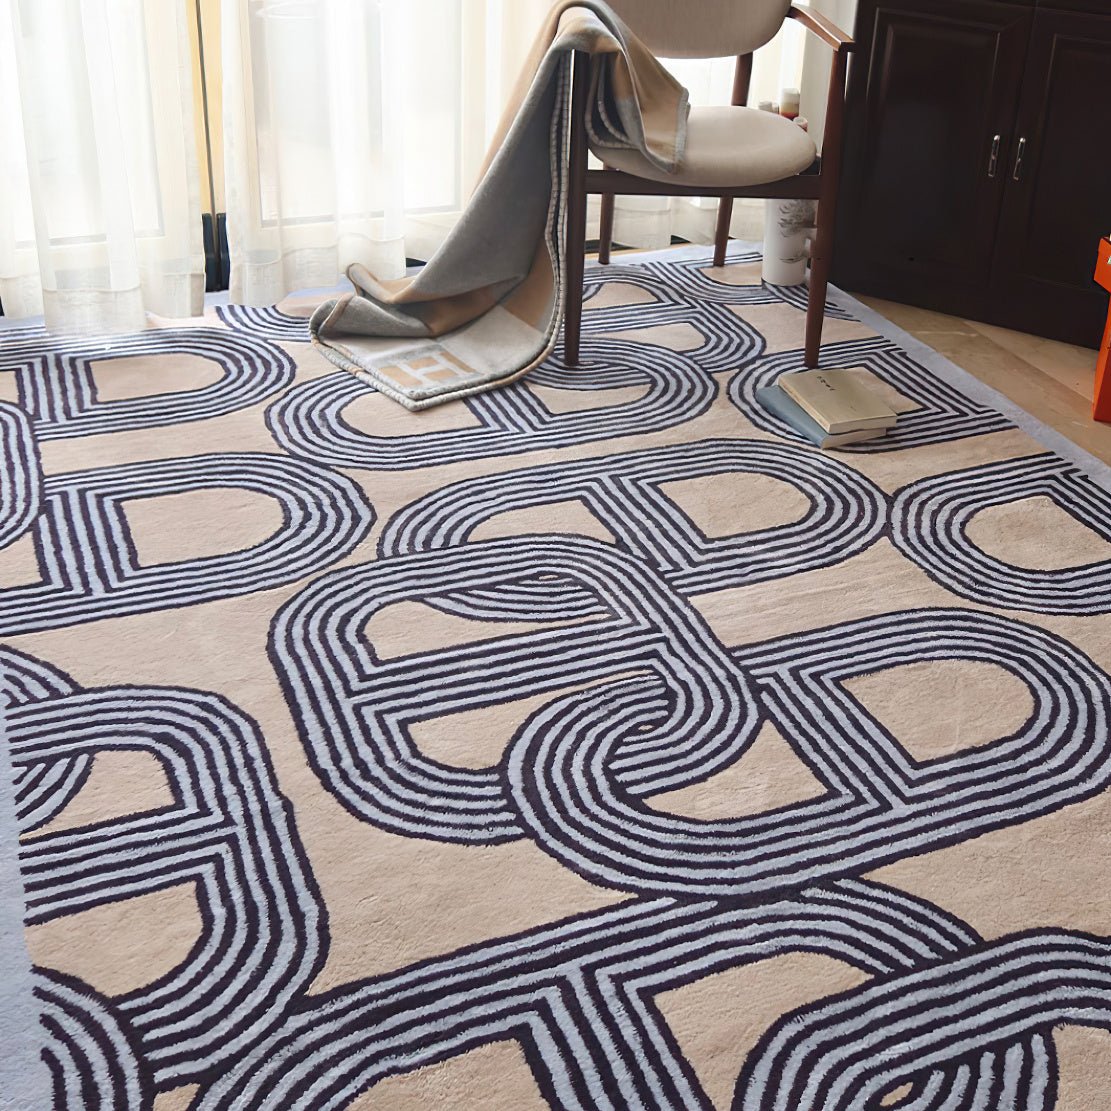 Blue and white geometric modern floor carpet.